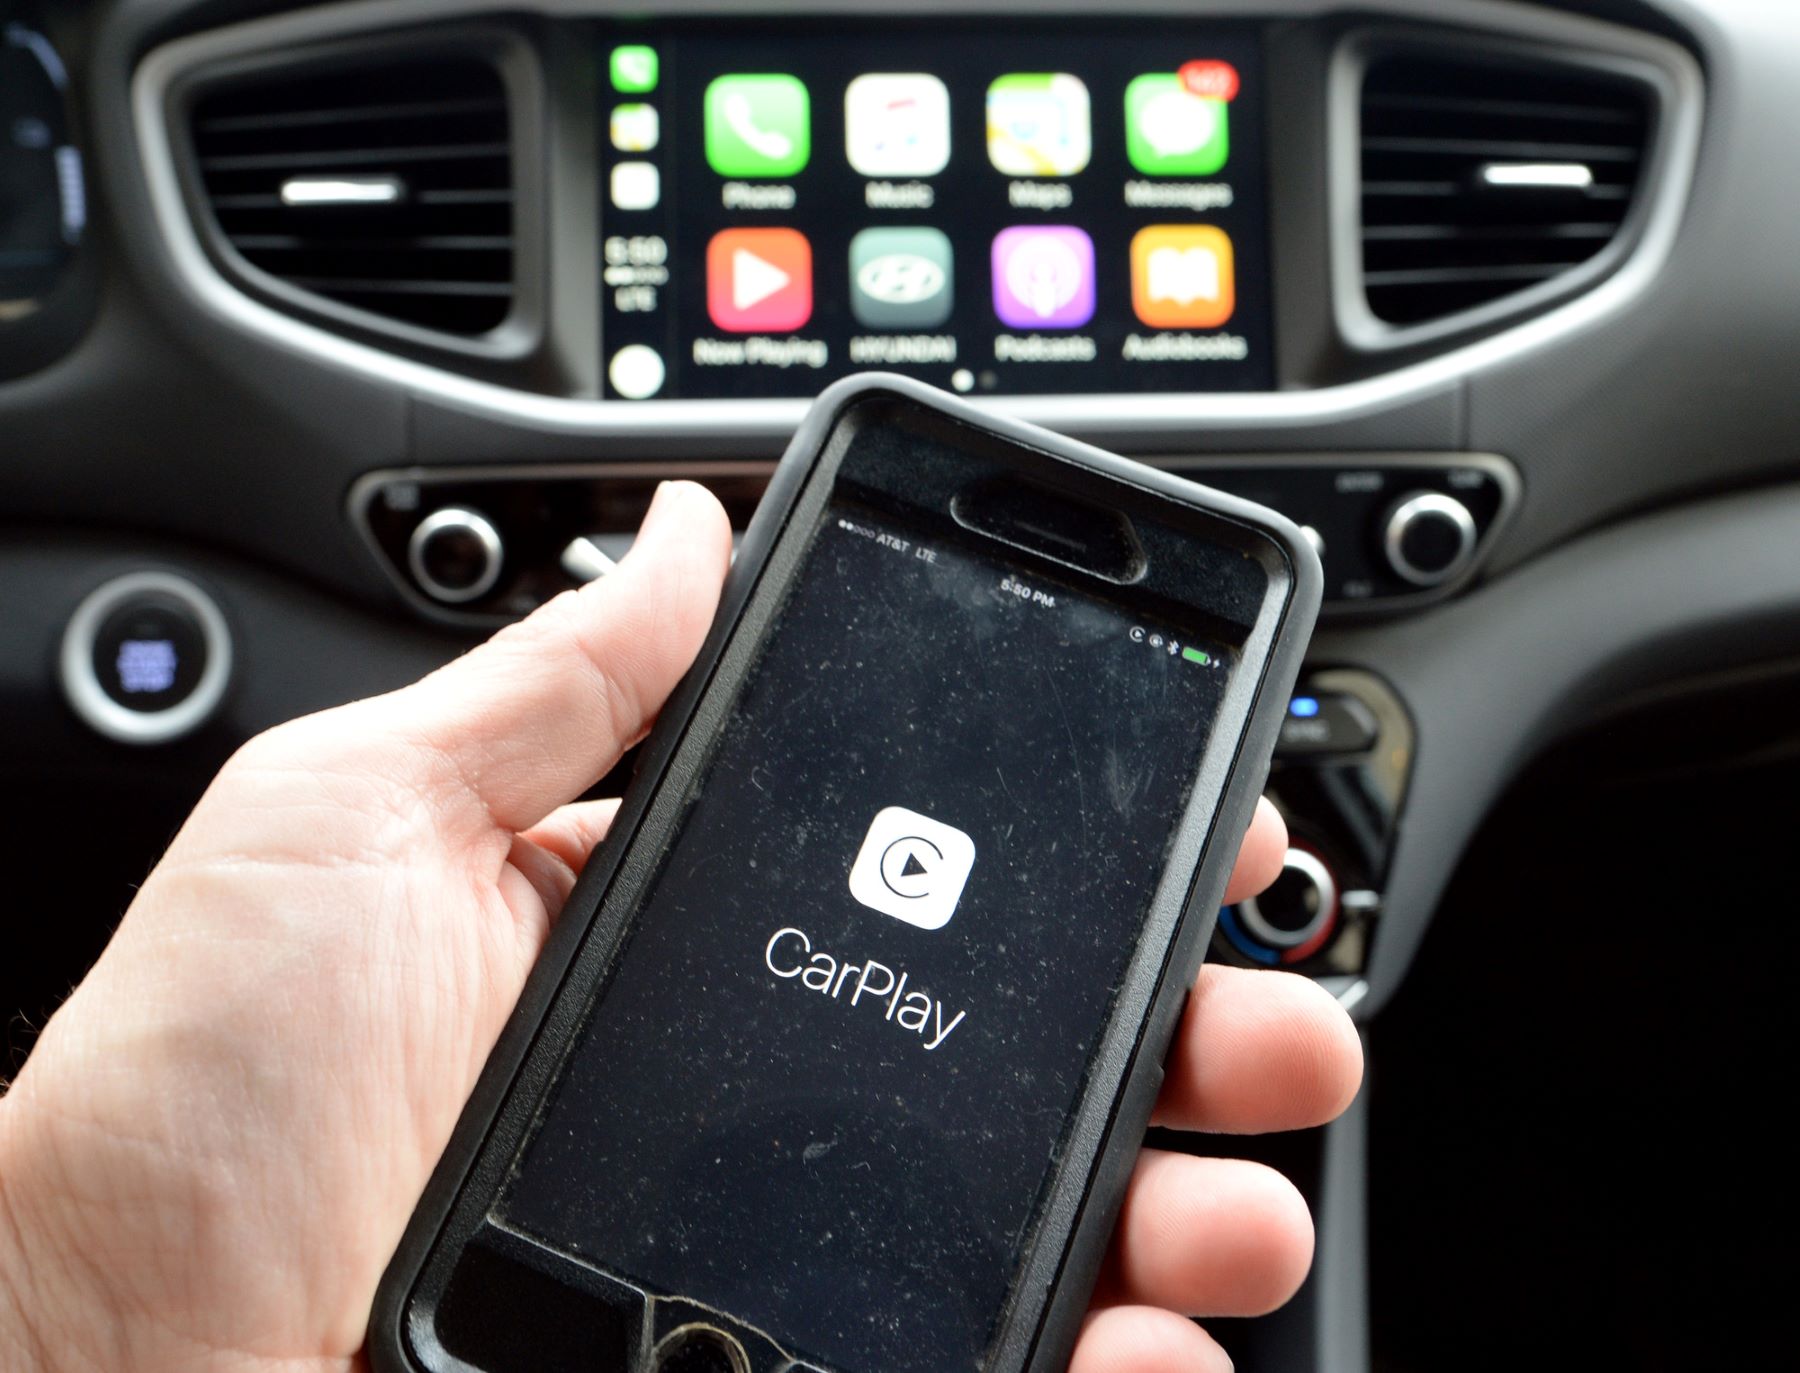 Apple CarPlay being used through an iPhone smartphone in a 2017 Hyundai Ioniq